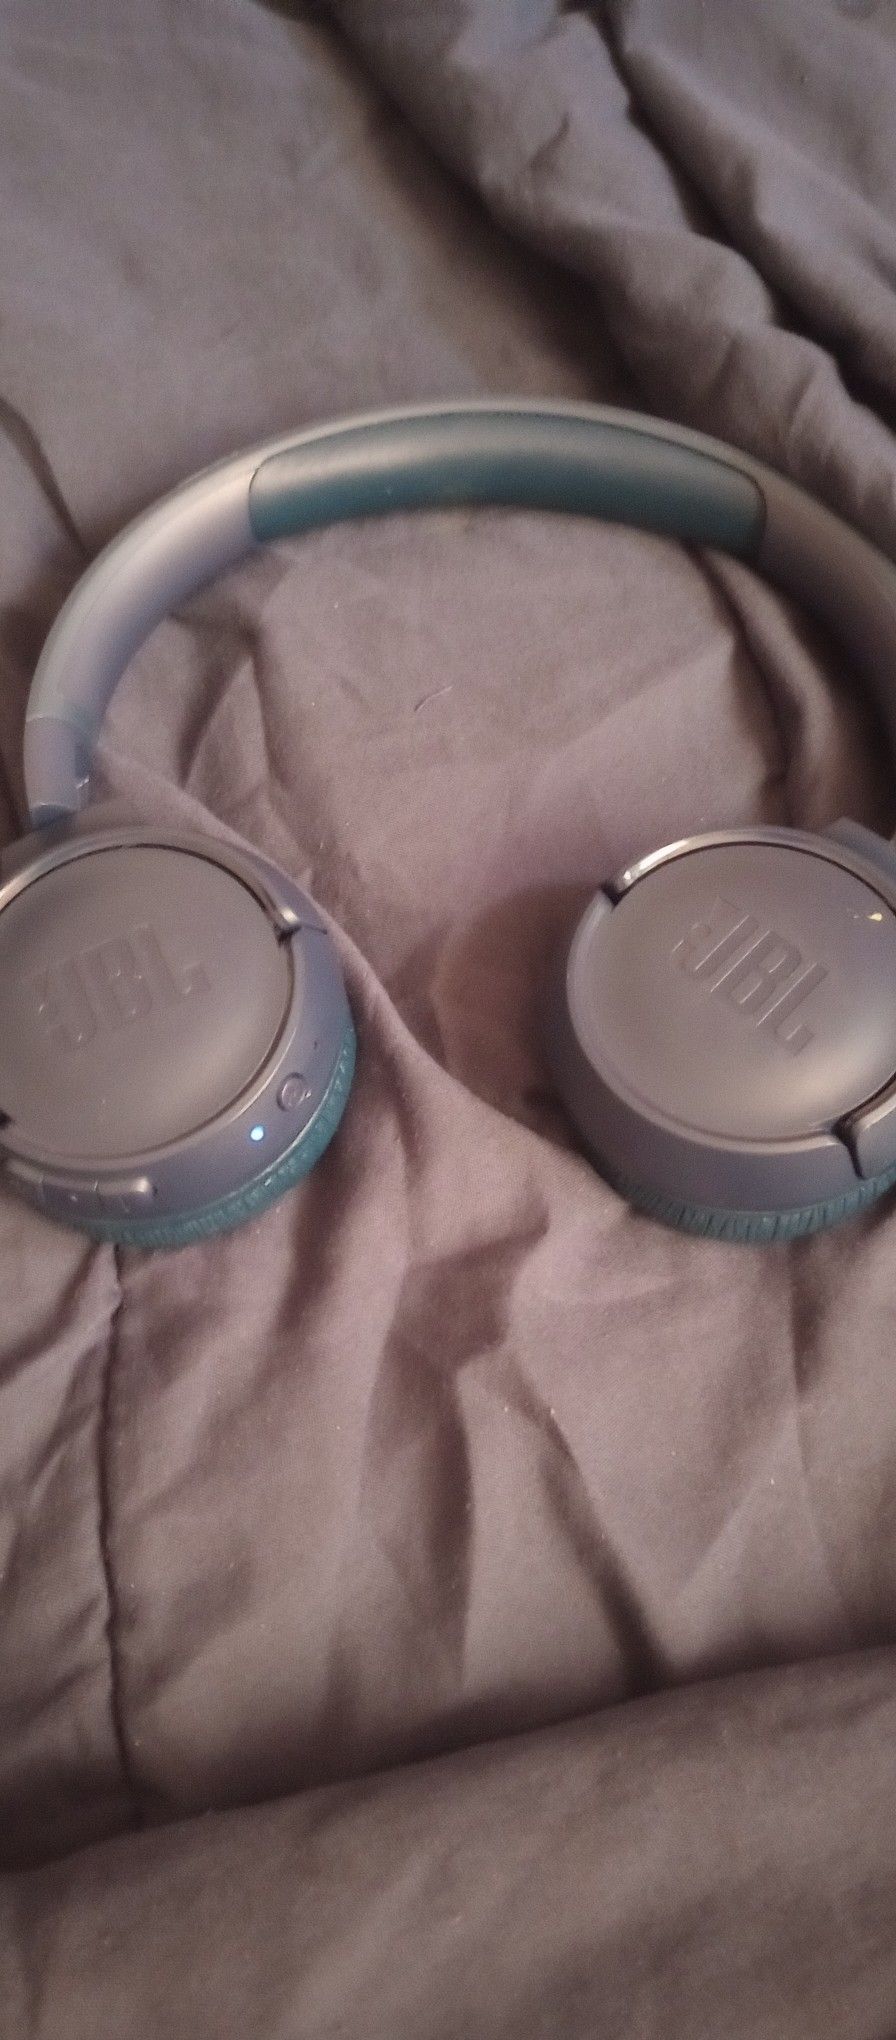 JBL  Tune510 BT  Pure Bass  Wireless Headphones